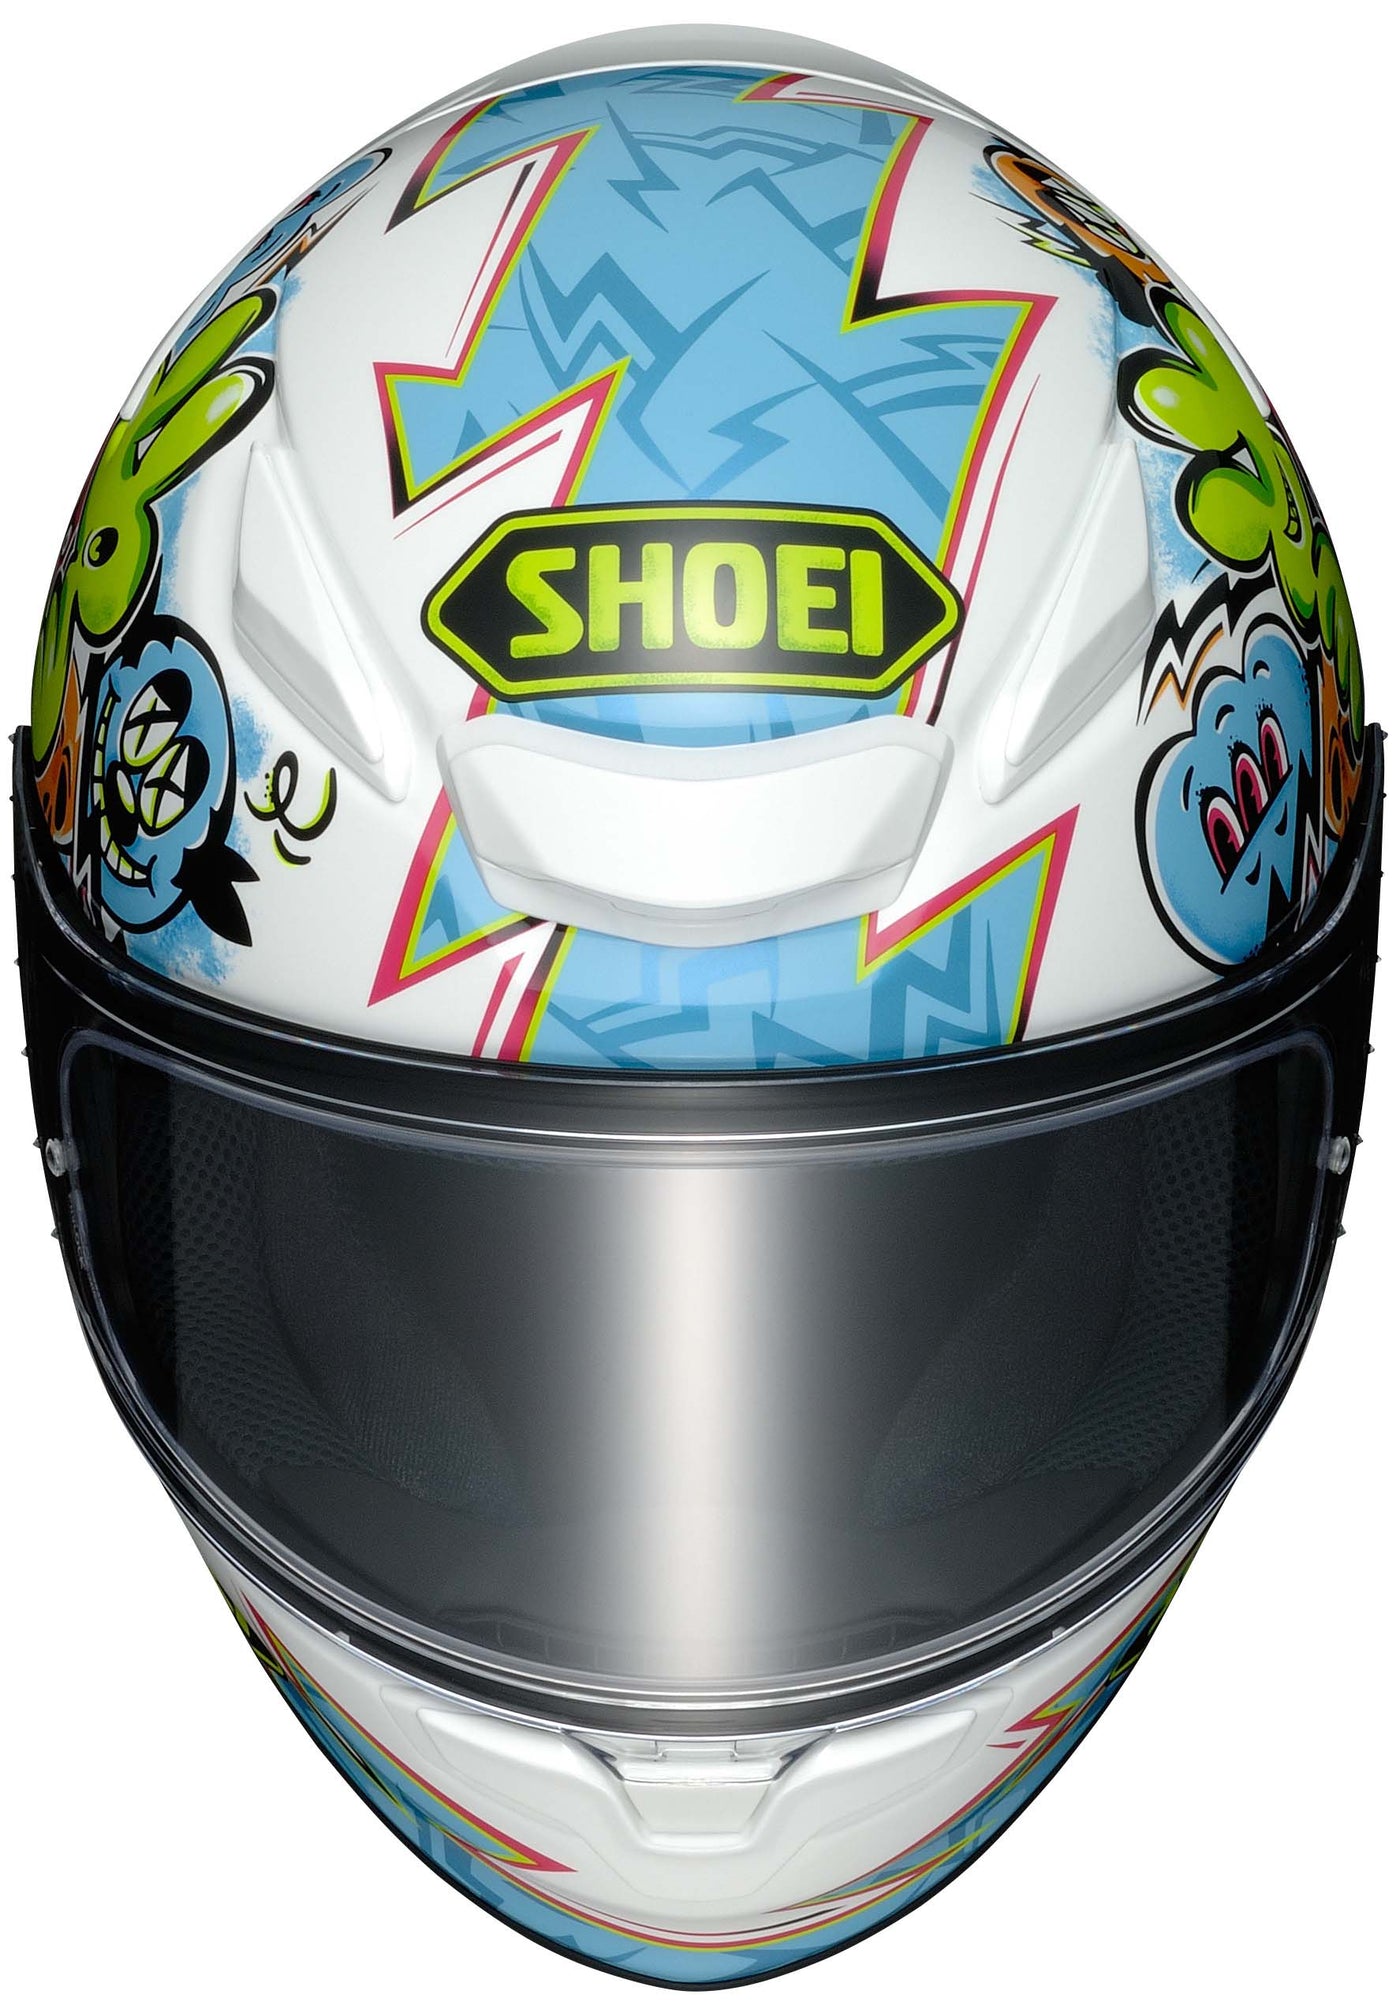 Shoei RF-1400 Mural Full Face Motorcycle Helmet